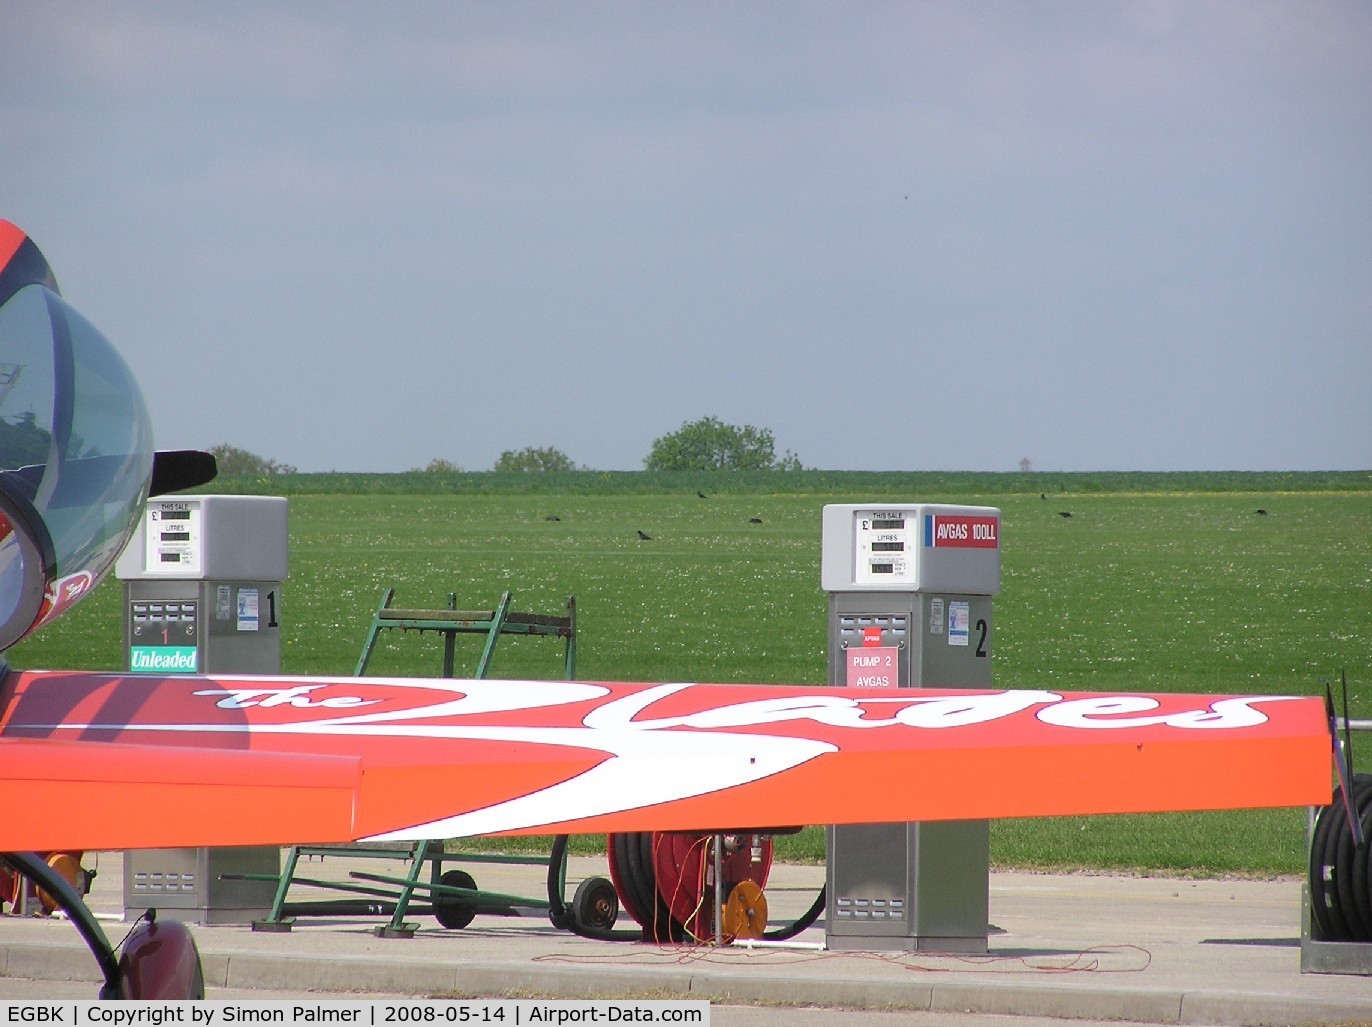 Sywell Aerodrome Airport, Northampton, England United Kingdom (EGBK) - Sywell aerodrome activity